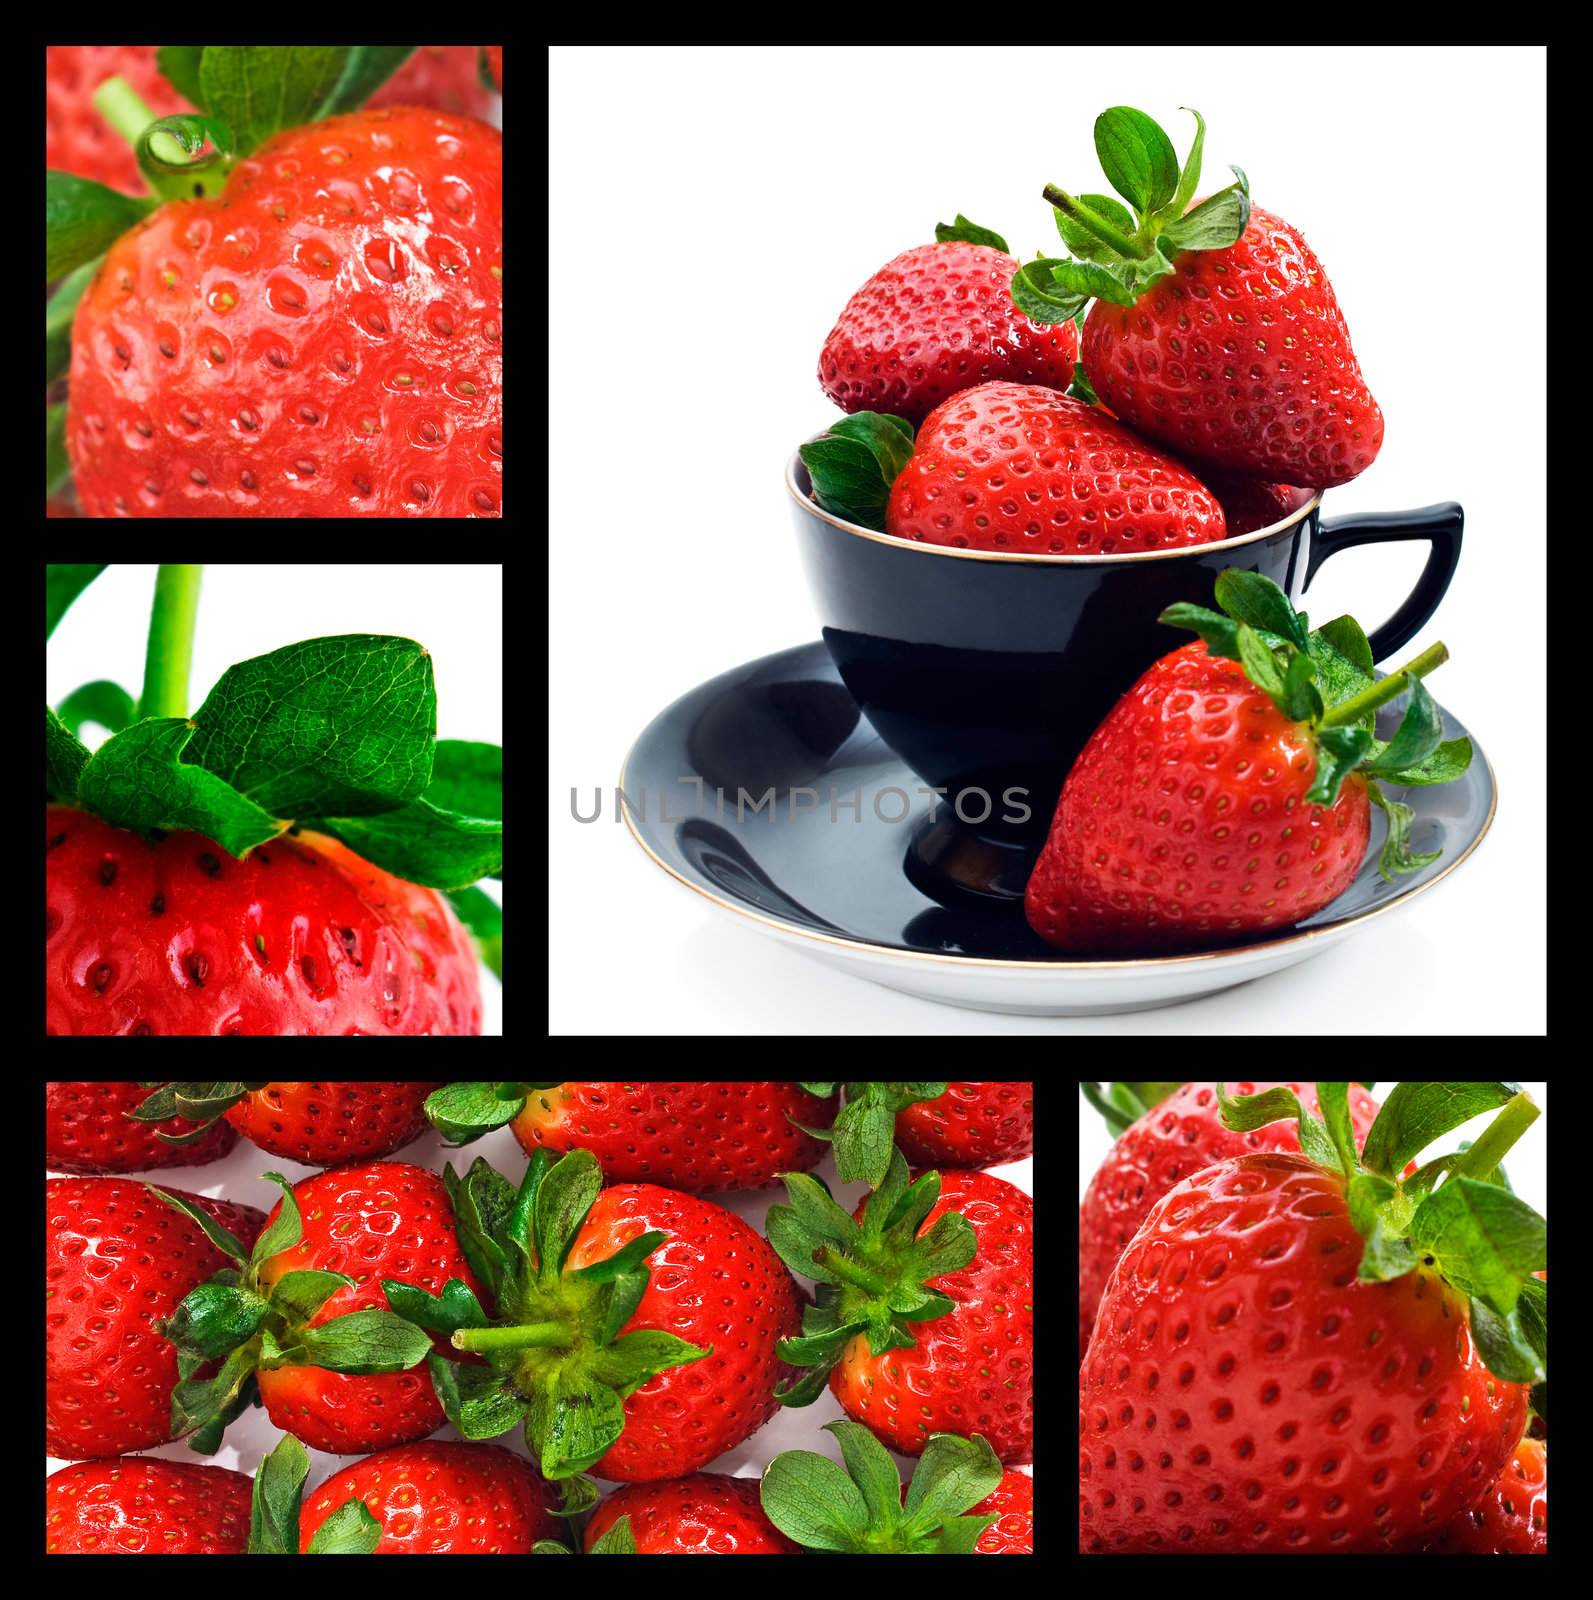 Strawberry collage - ripe fresh strawberries